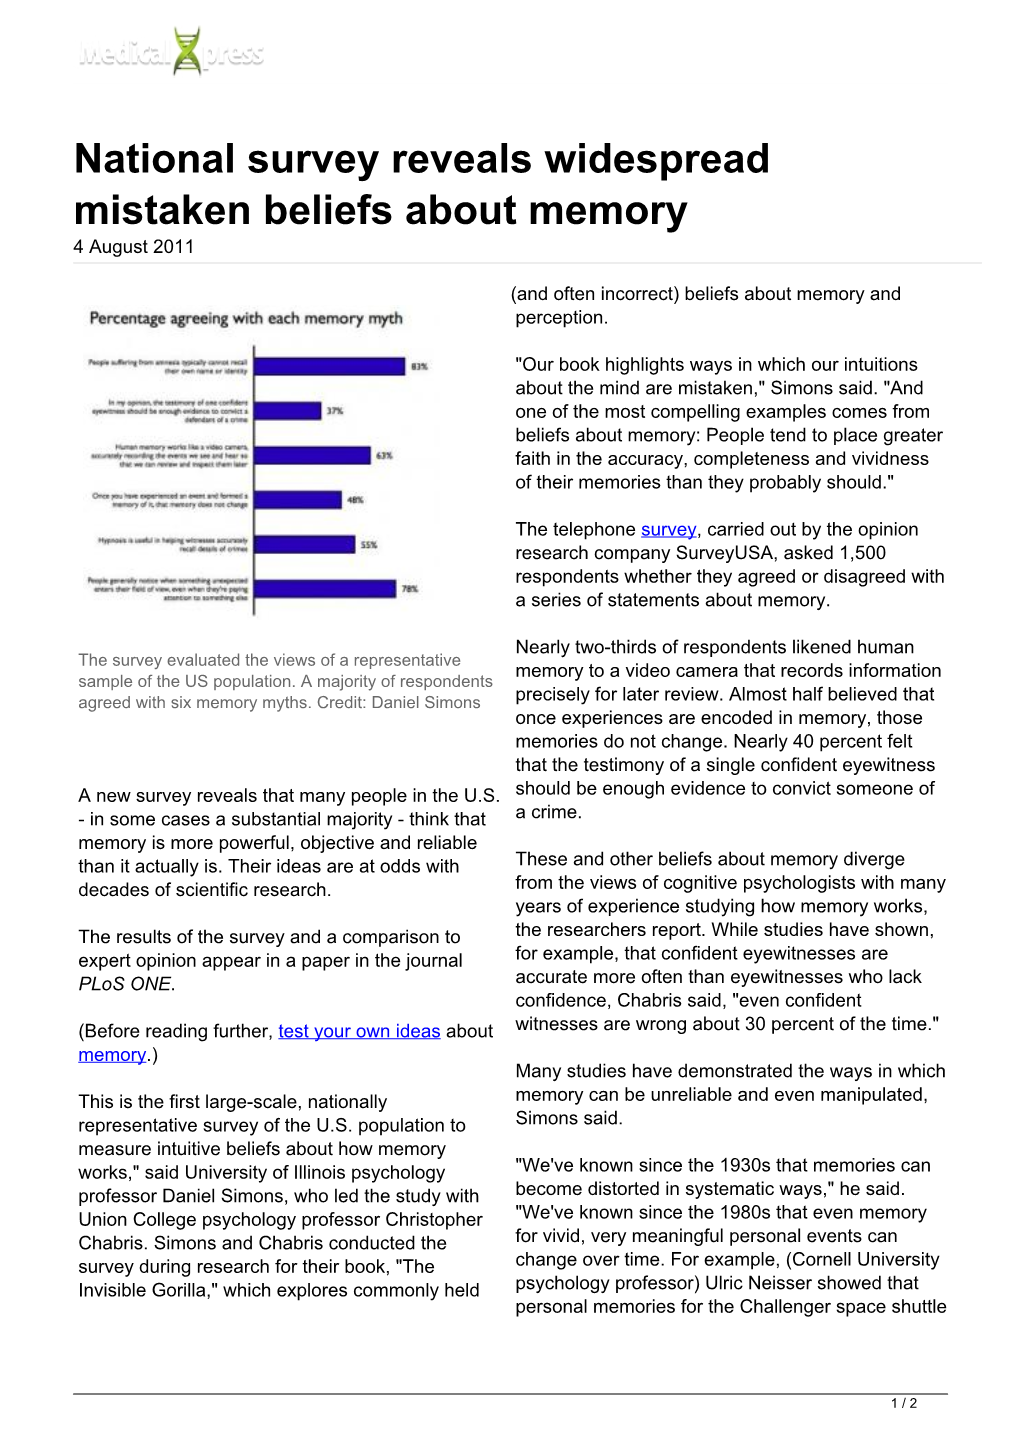 National Survey Reveals Widespread Mistaken Beliefs About Memory 4 August 2011